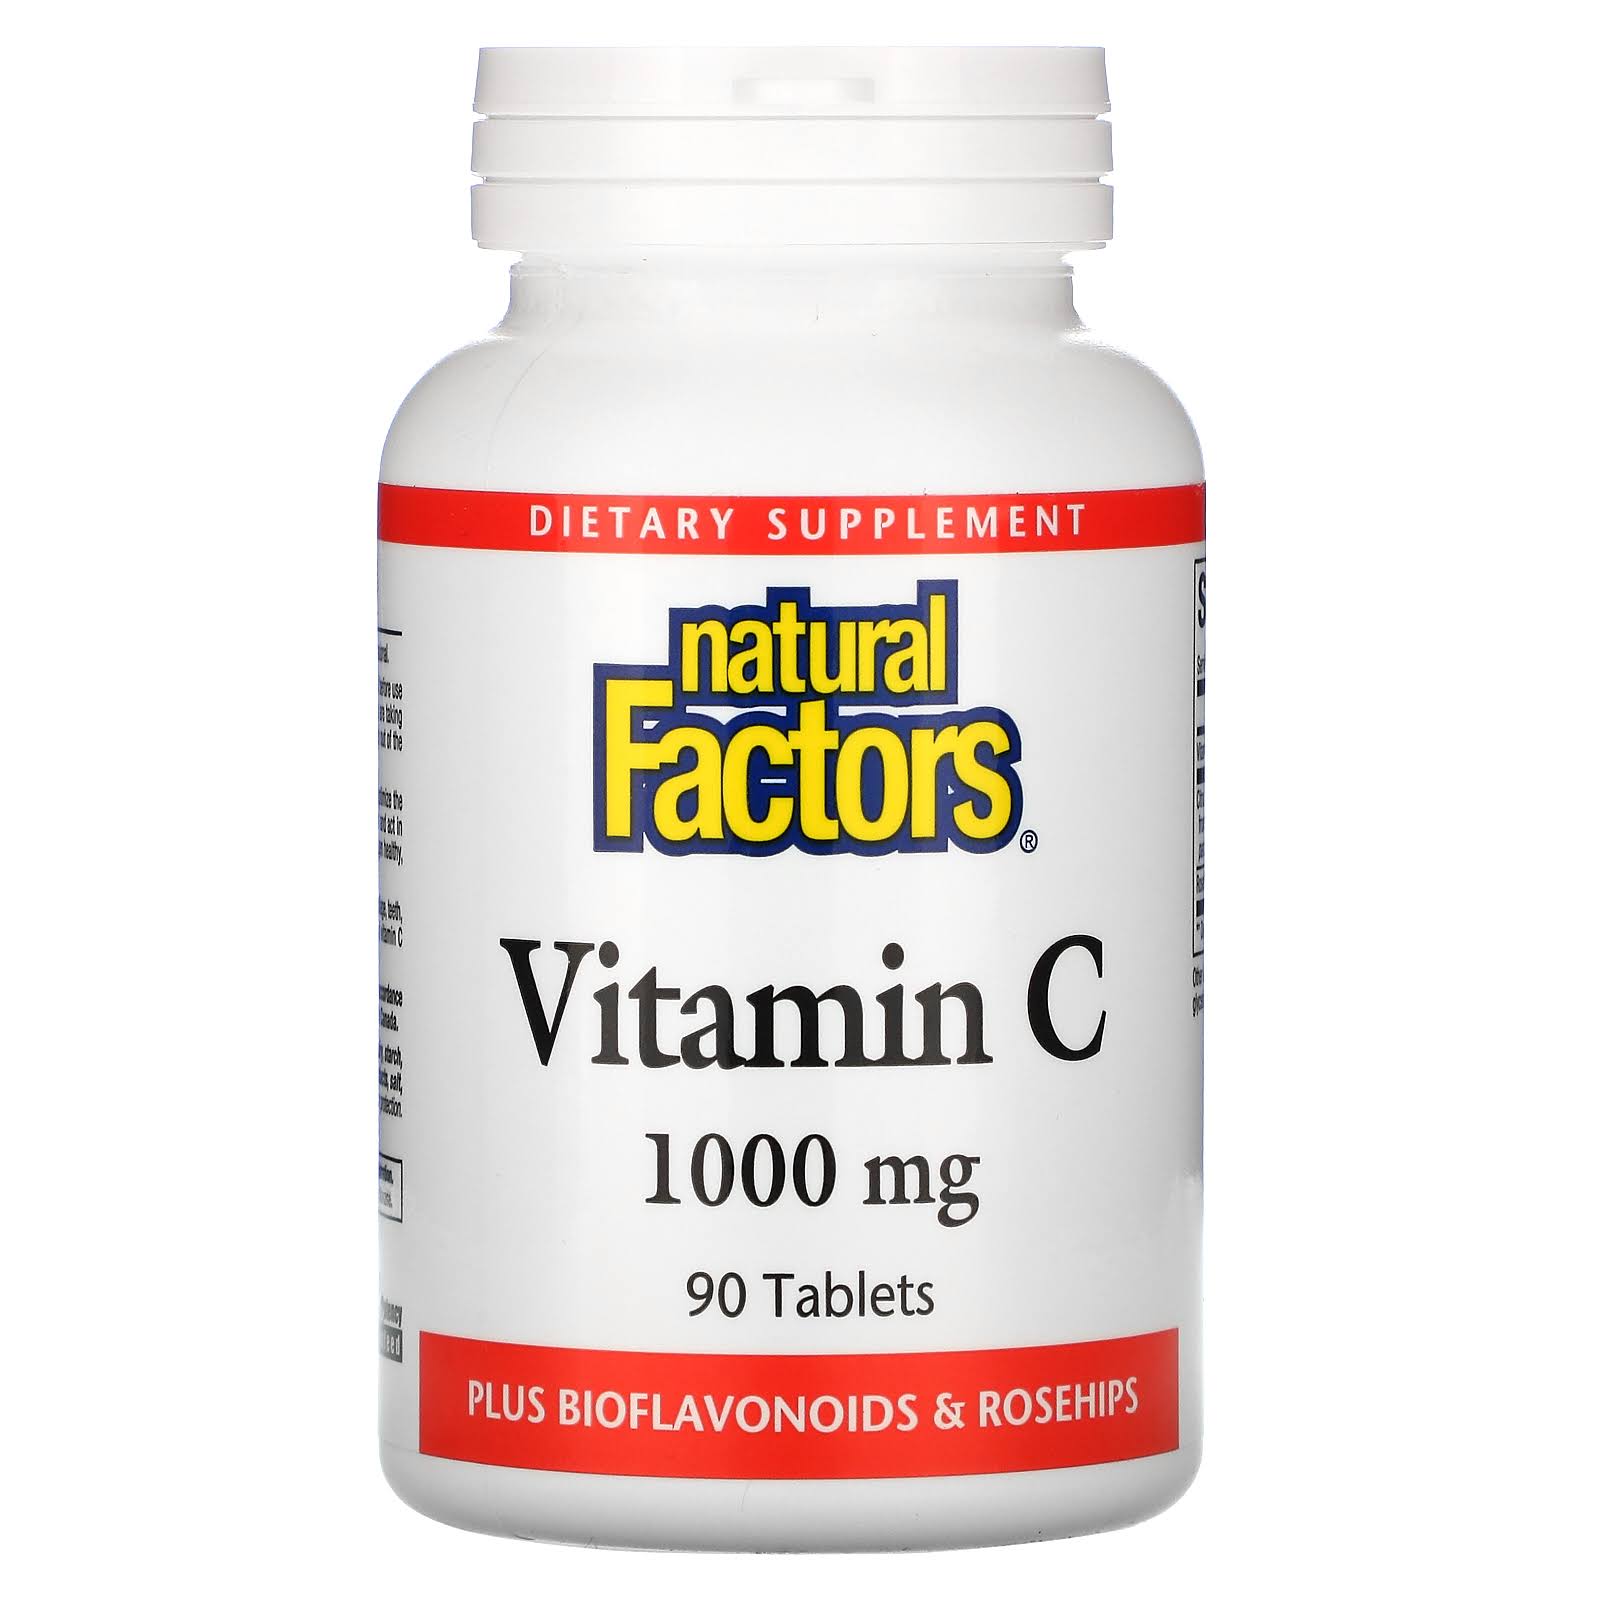 Natural Factors Vitamin C Dietary Supplement - 90 Tablets, 1000mg